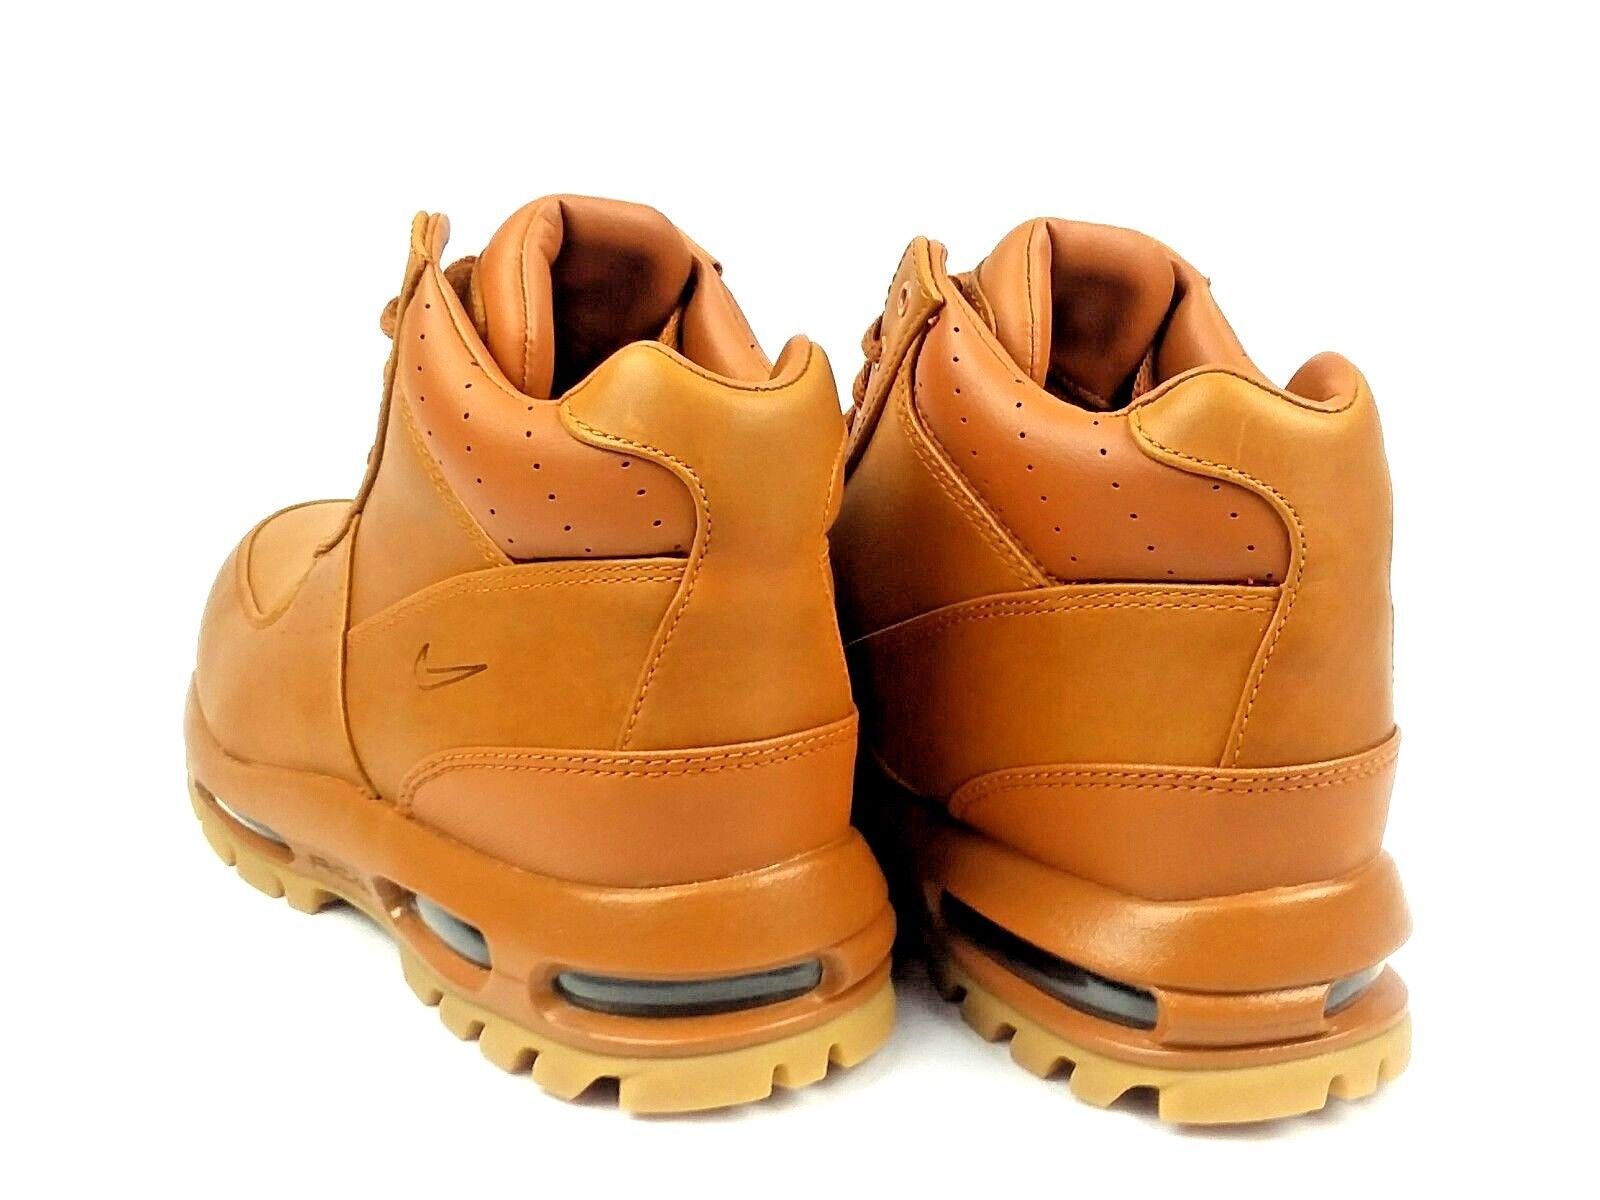 Nike Air Max Goadome Boots Tawnygum Light Brown Acg 865031 208 Mens